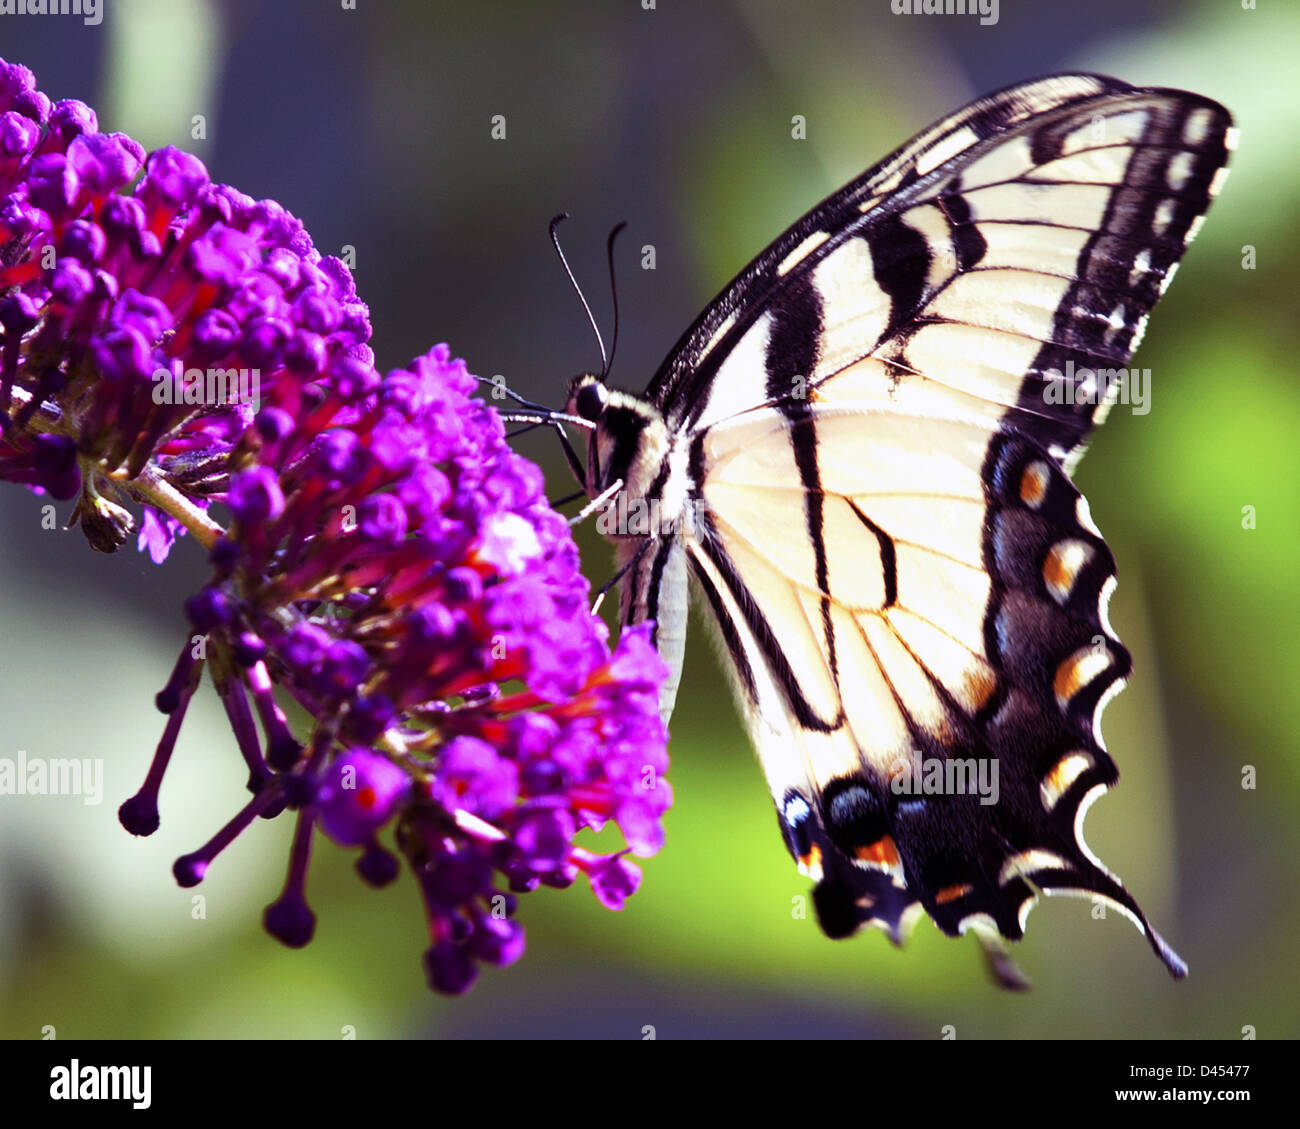 Swallowtail butterfly on a purple flower, Stock Photo